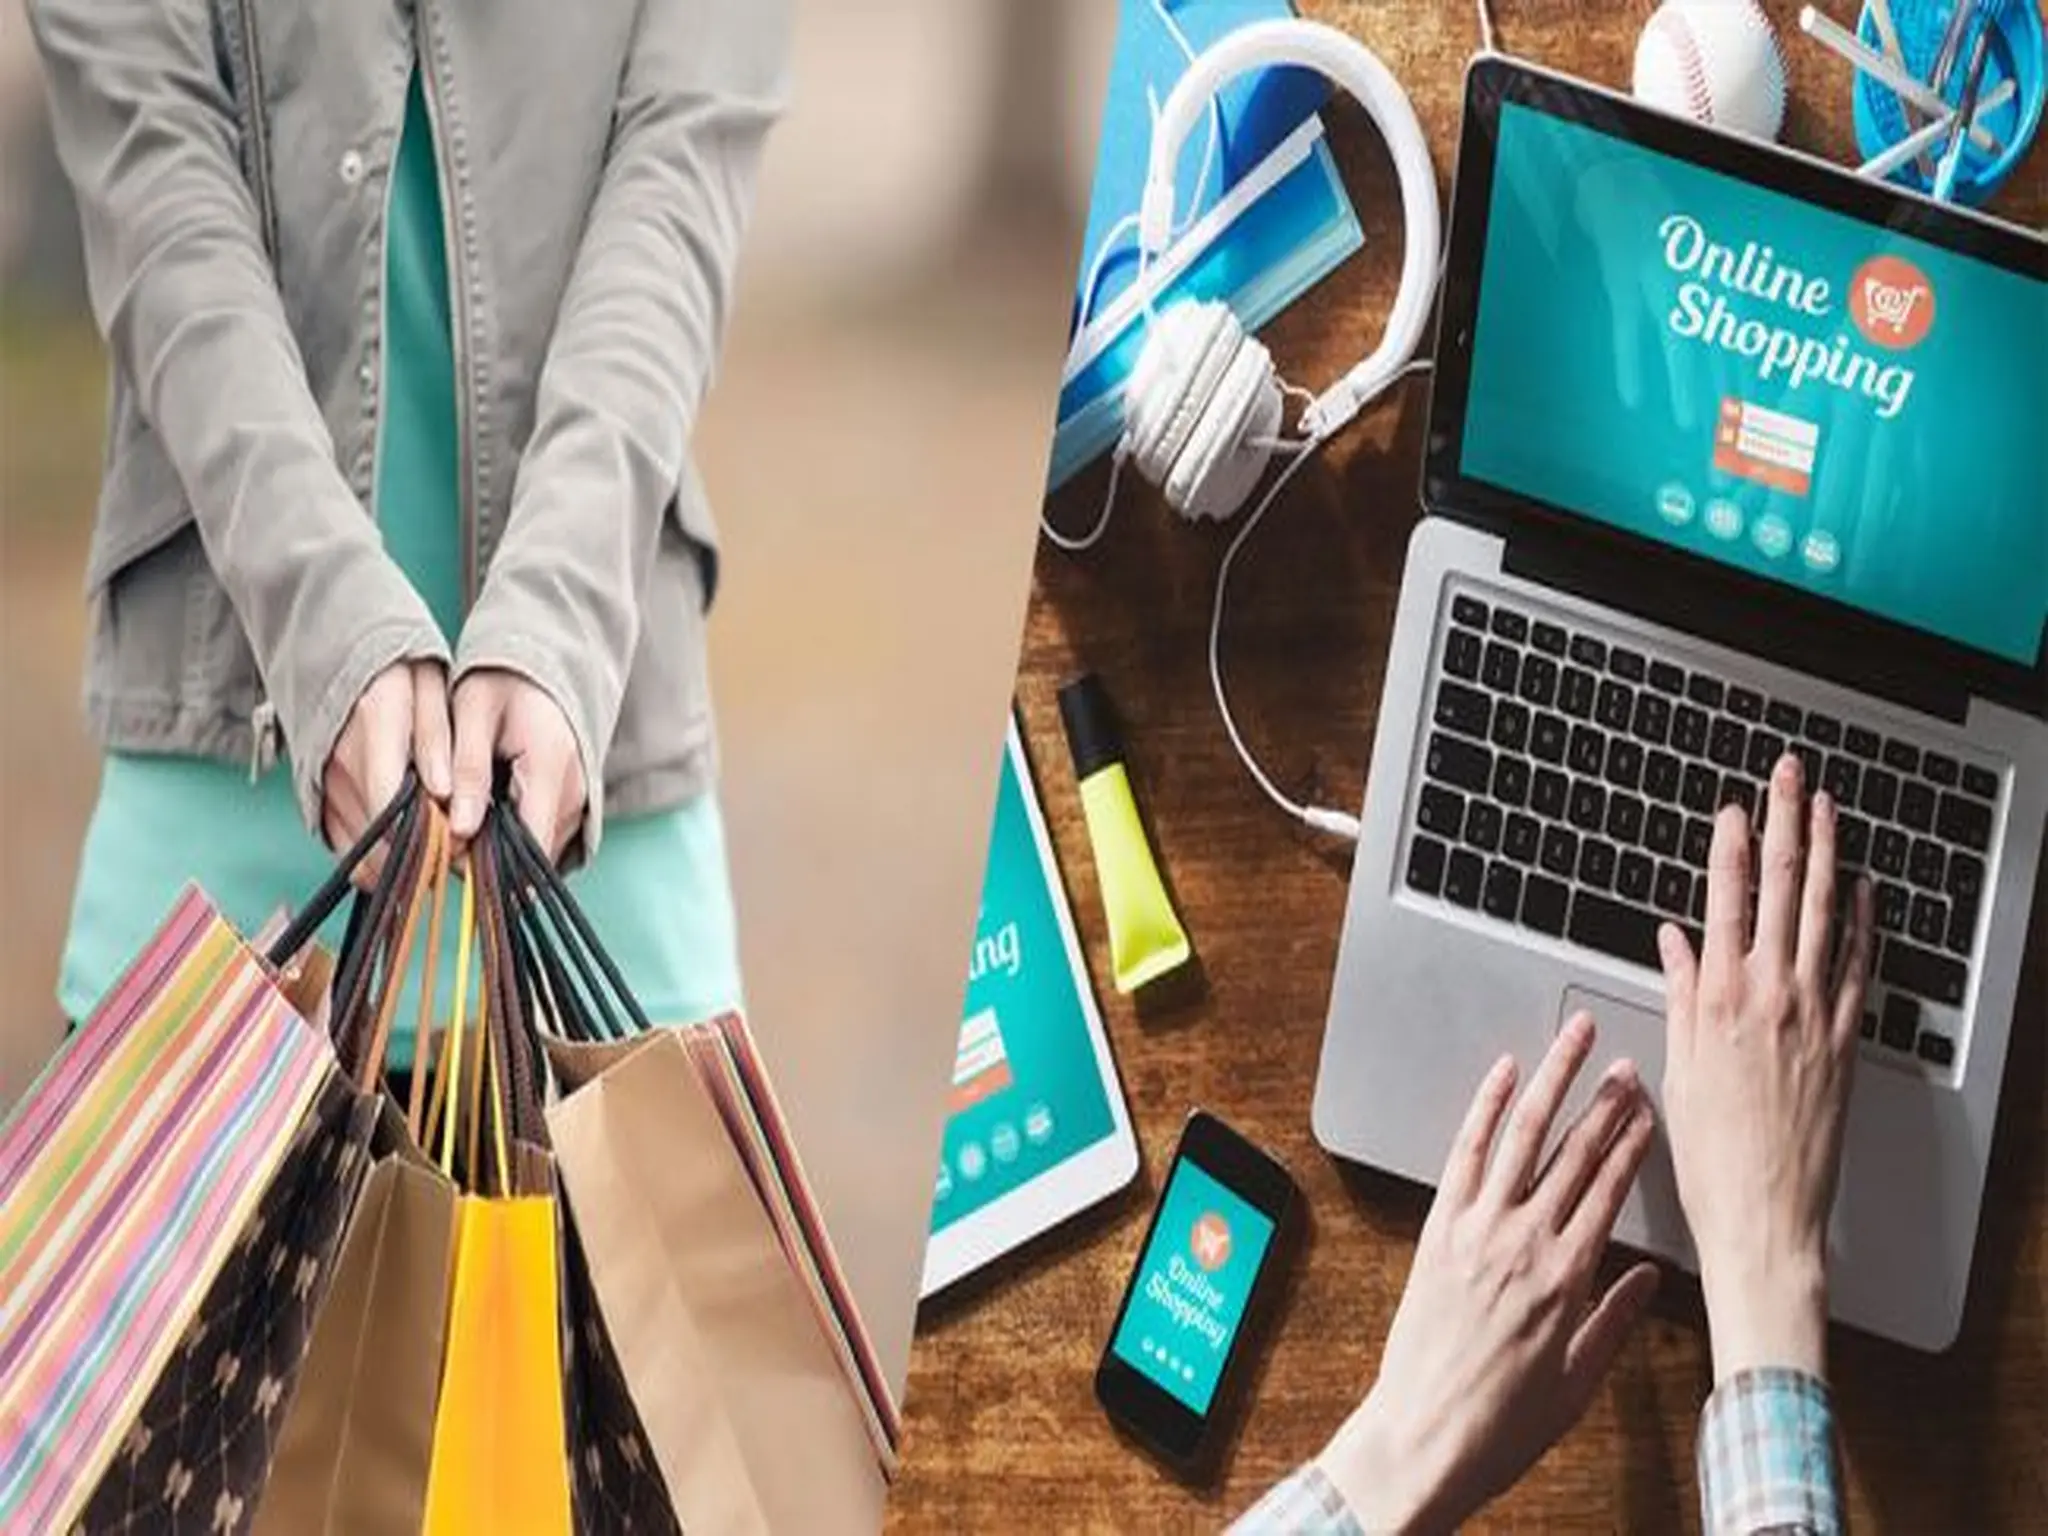 Dubai announces big discounts through online shopping